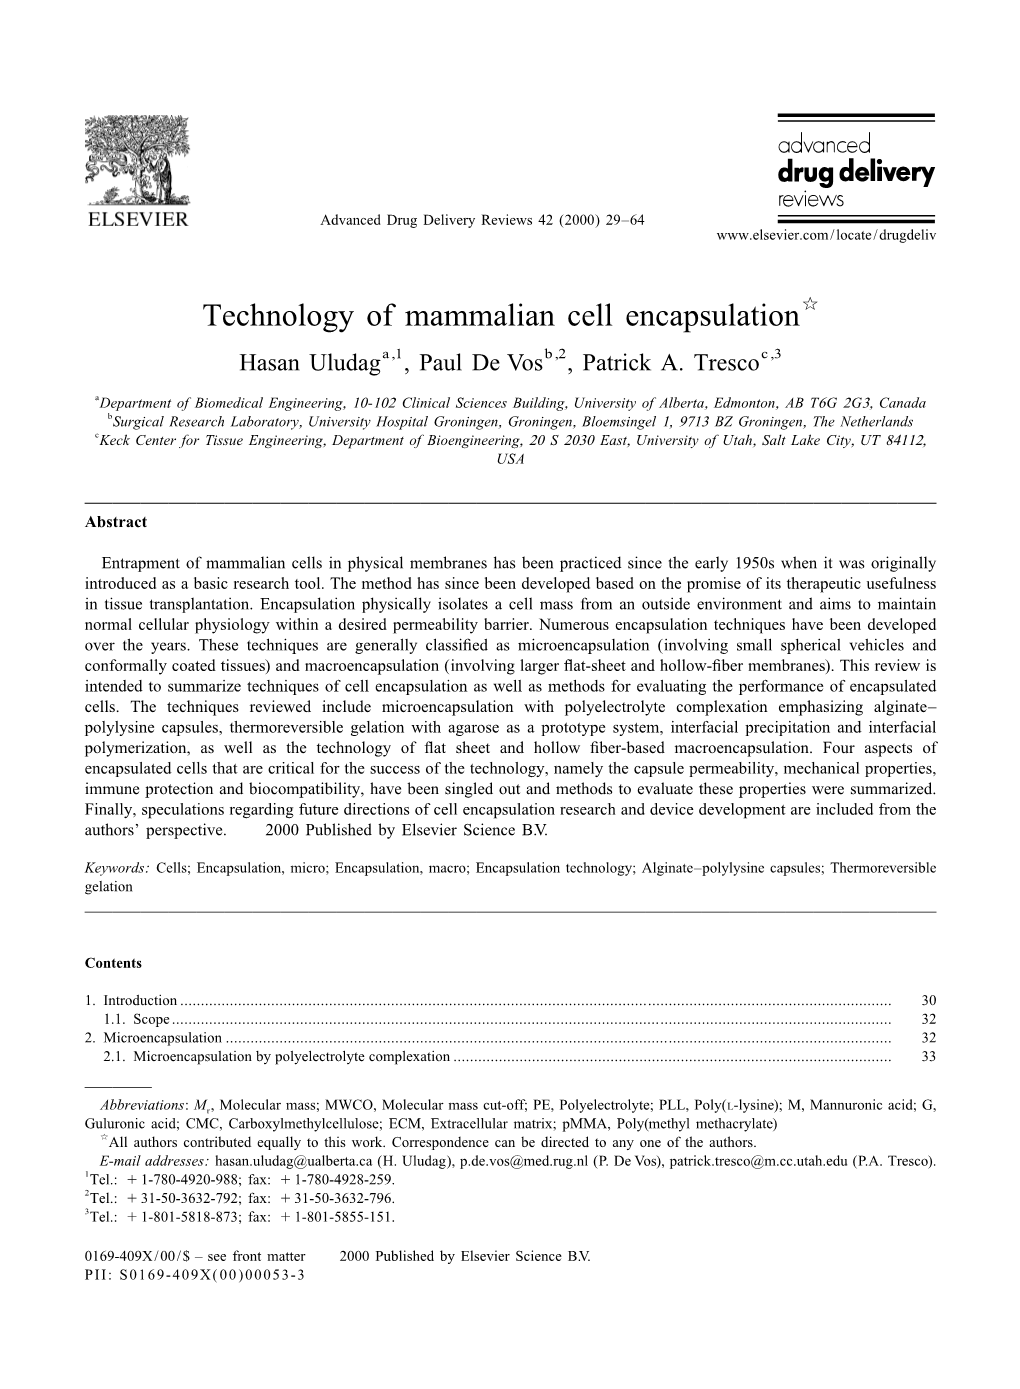 Technology of Mammalian Cell Encapsulation Hasan Uludaga,1 , Paul De Vos B,2 , Patrick A